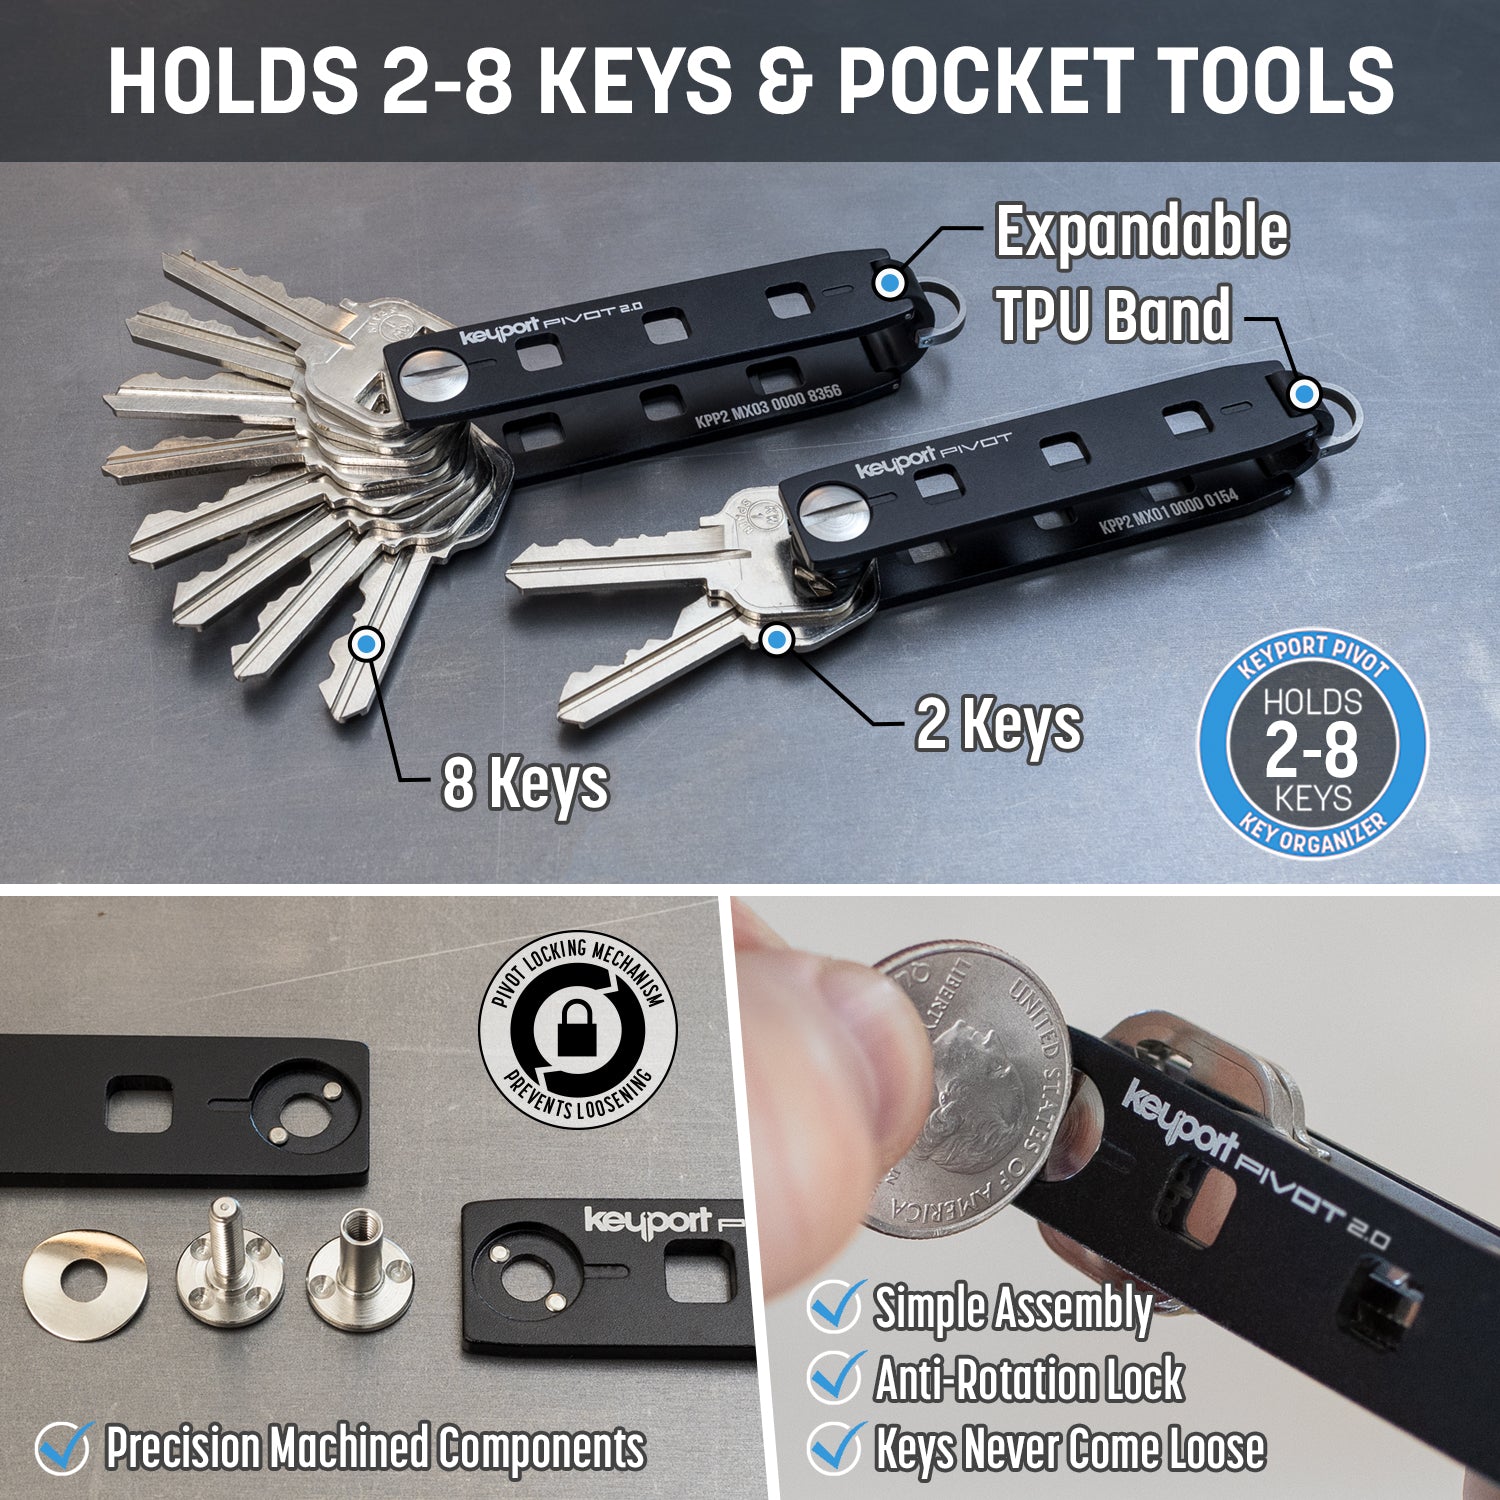 Keyport Pivot 2.0 Essential Plus Kit